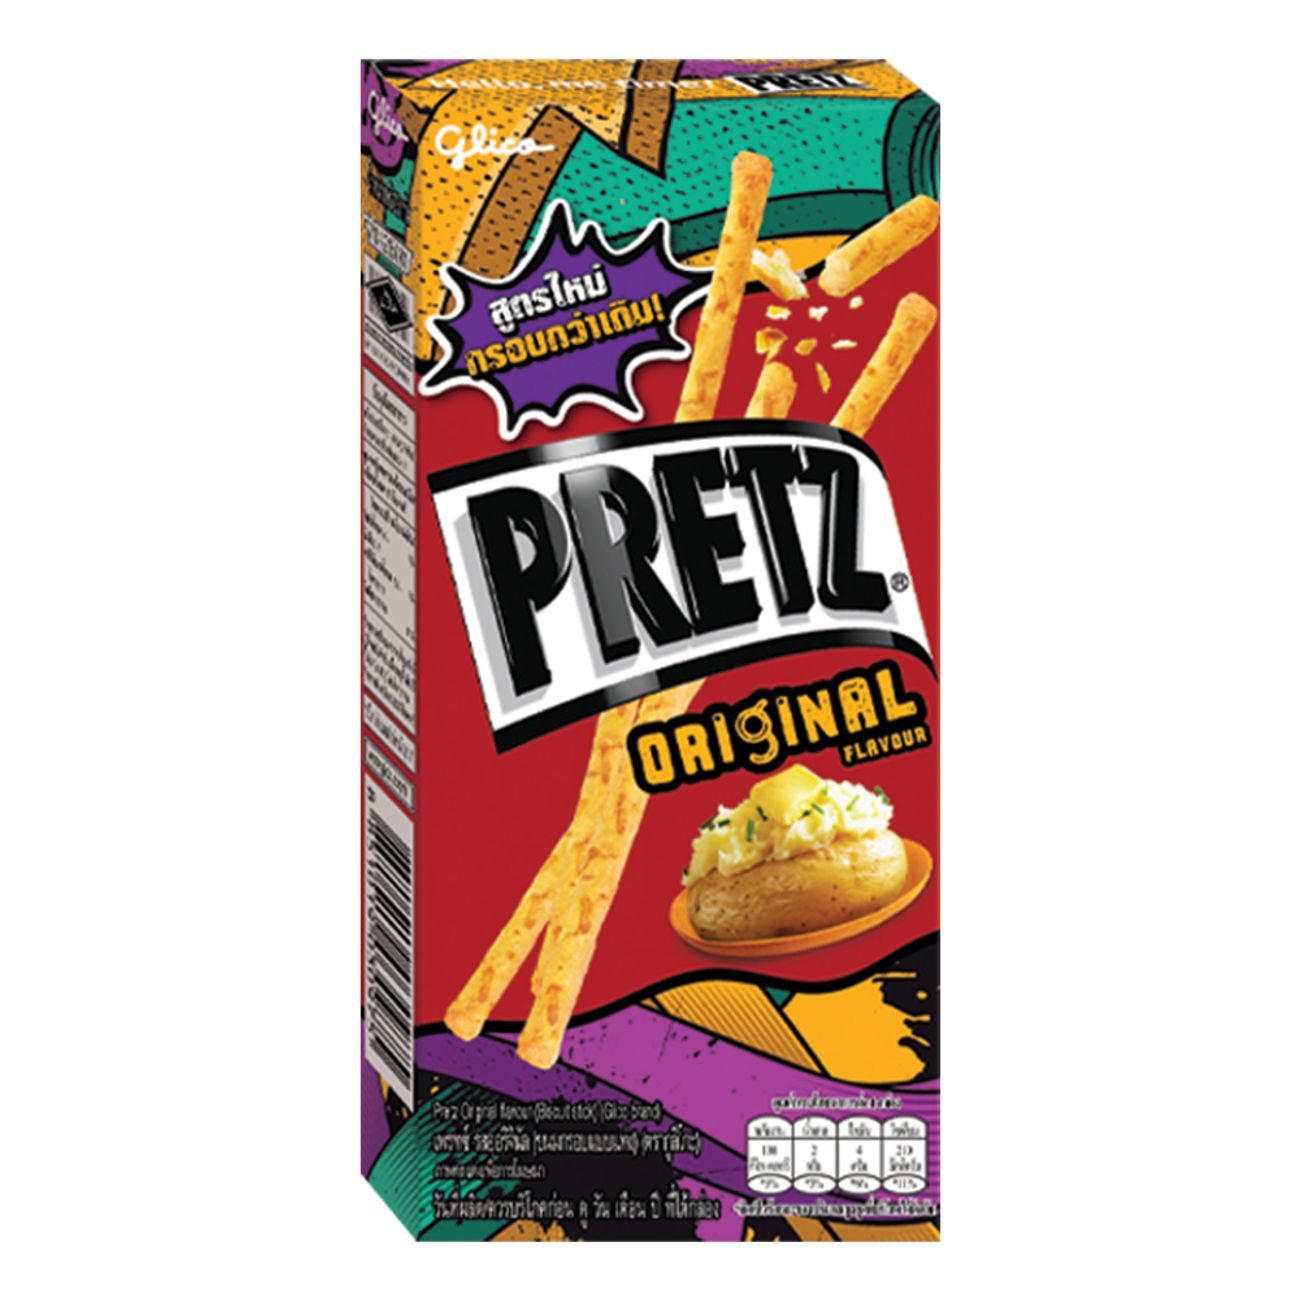 pretz-original-flavor-99860-1